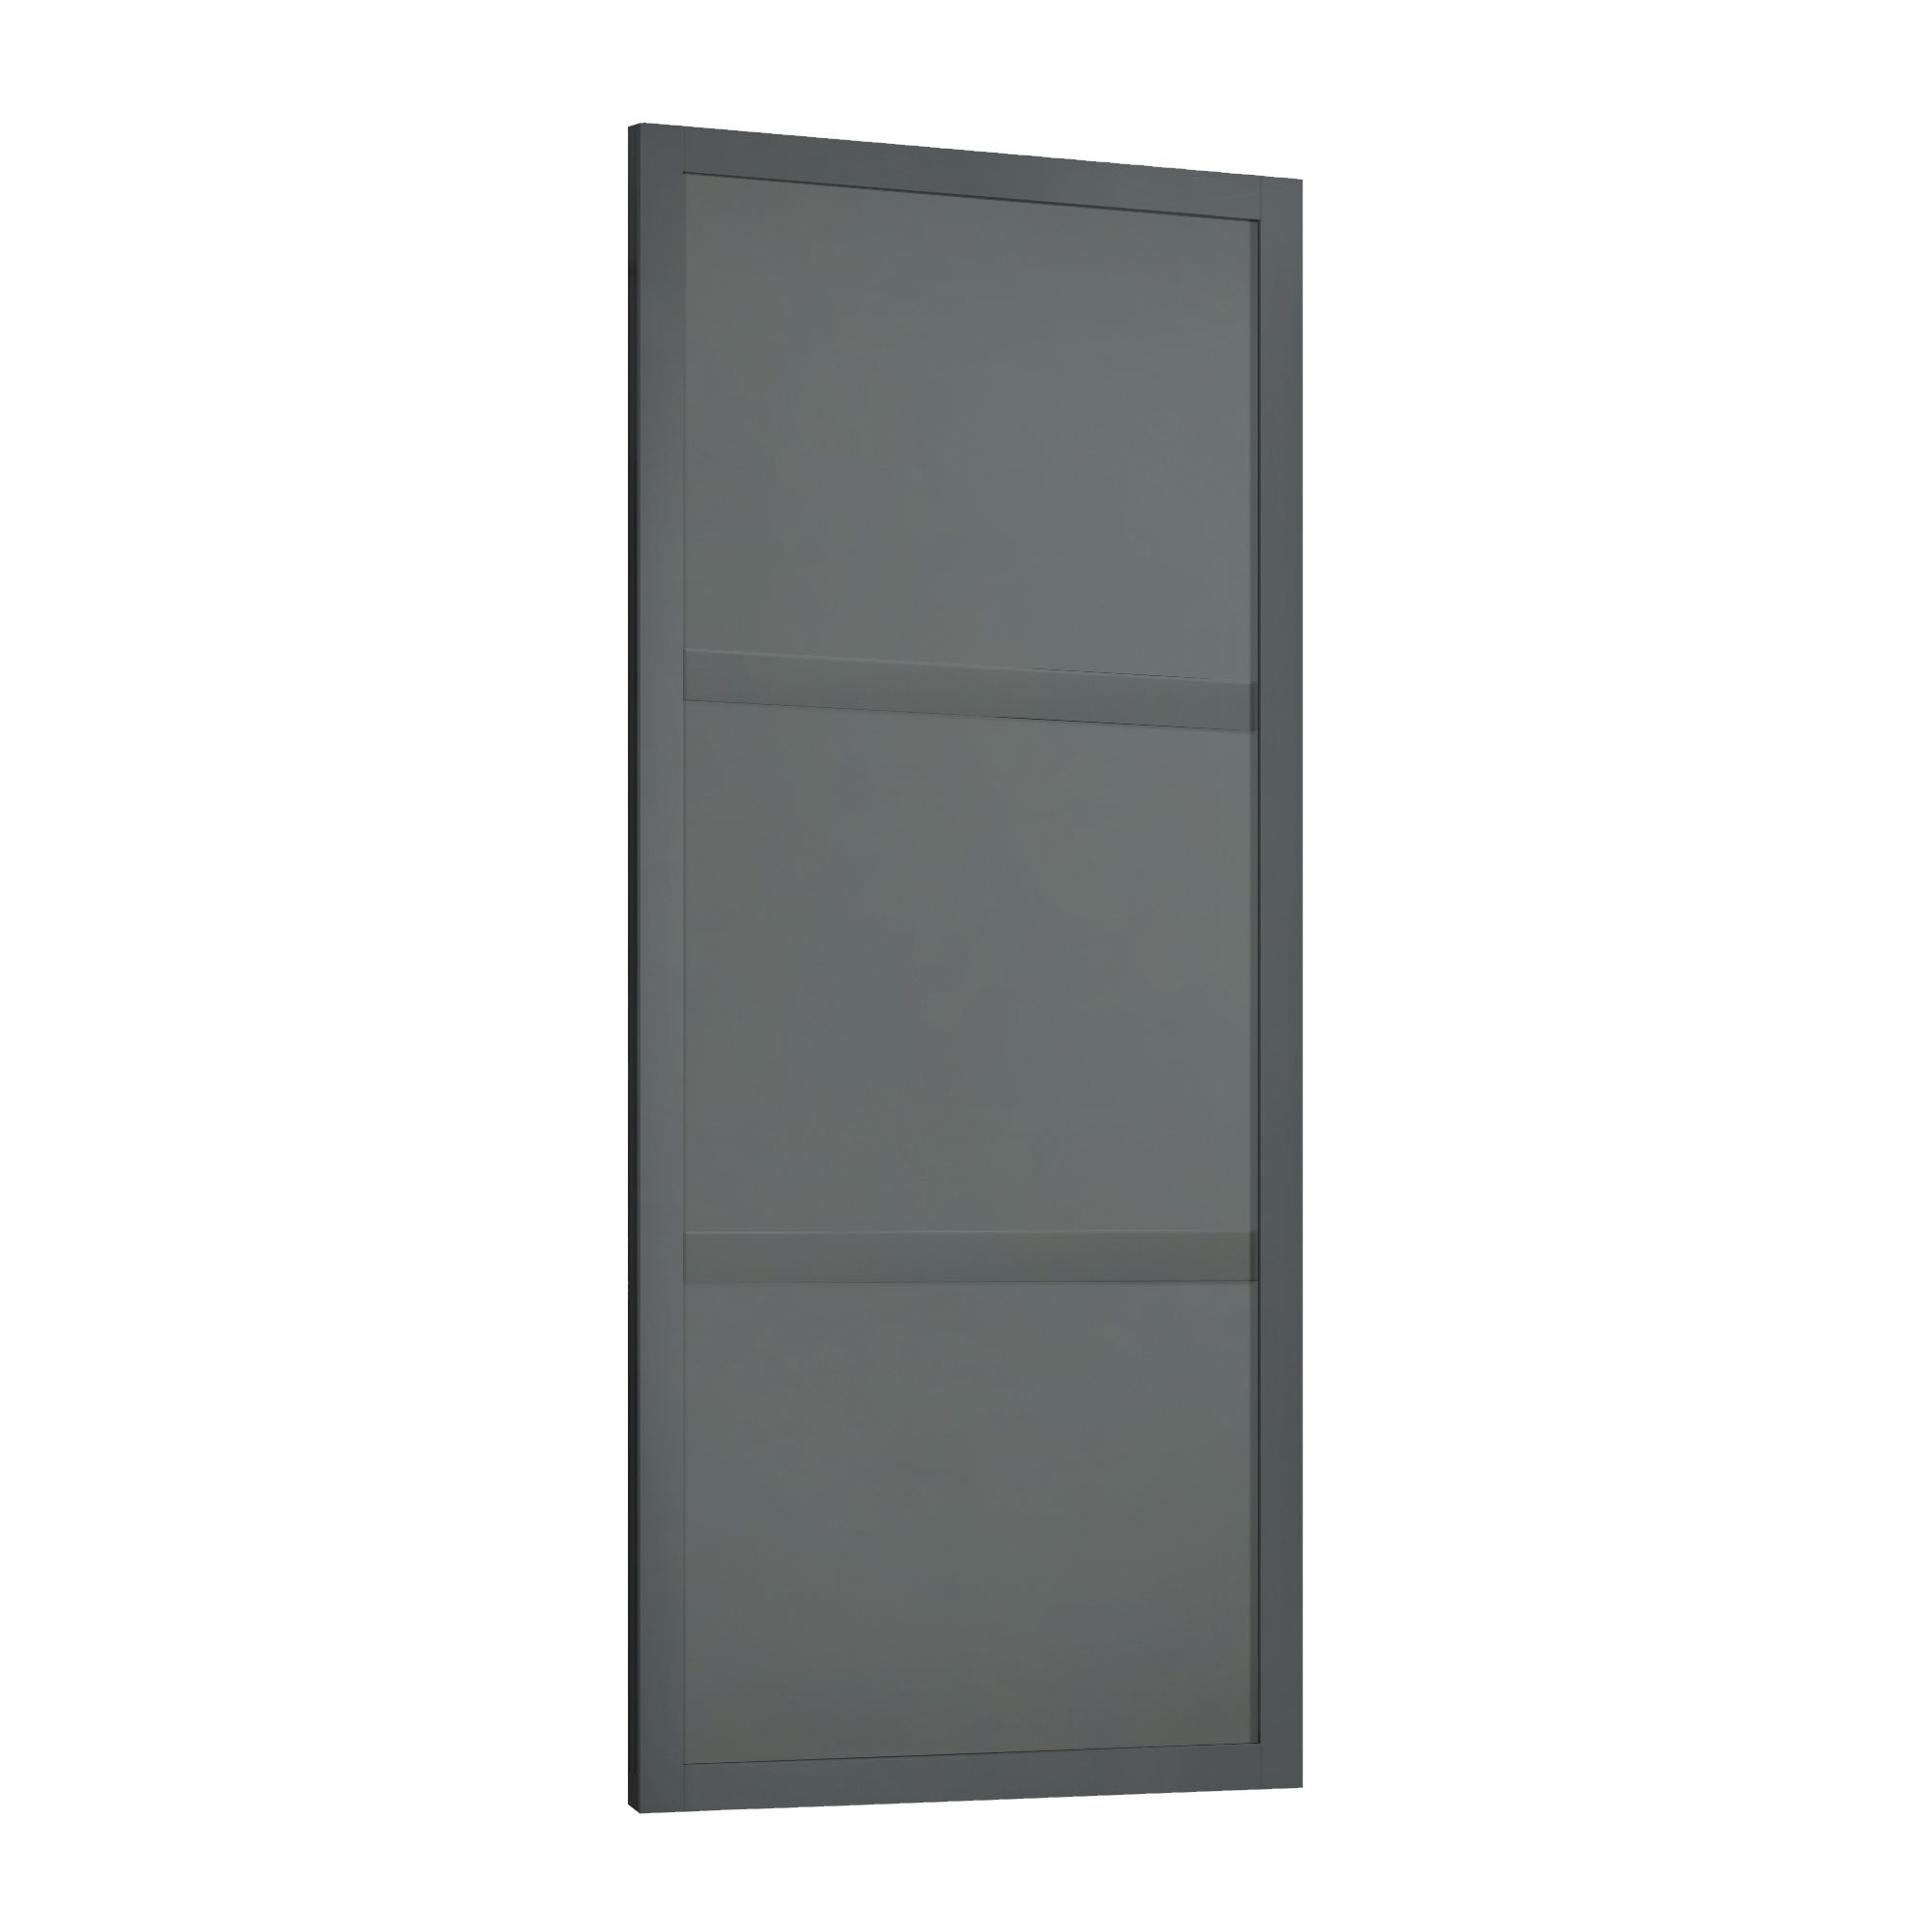 Spacepro Shaker Matt Dark Grey 3 panel Sliding wardrobe door (H) 2220mm x (W) 610mm